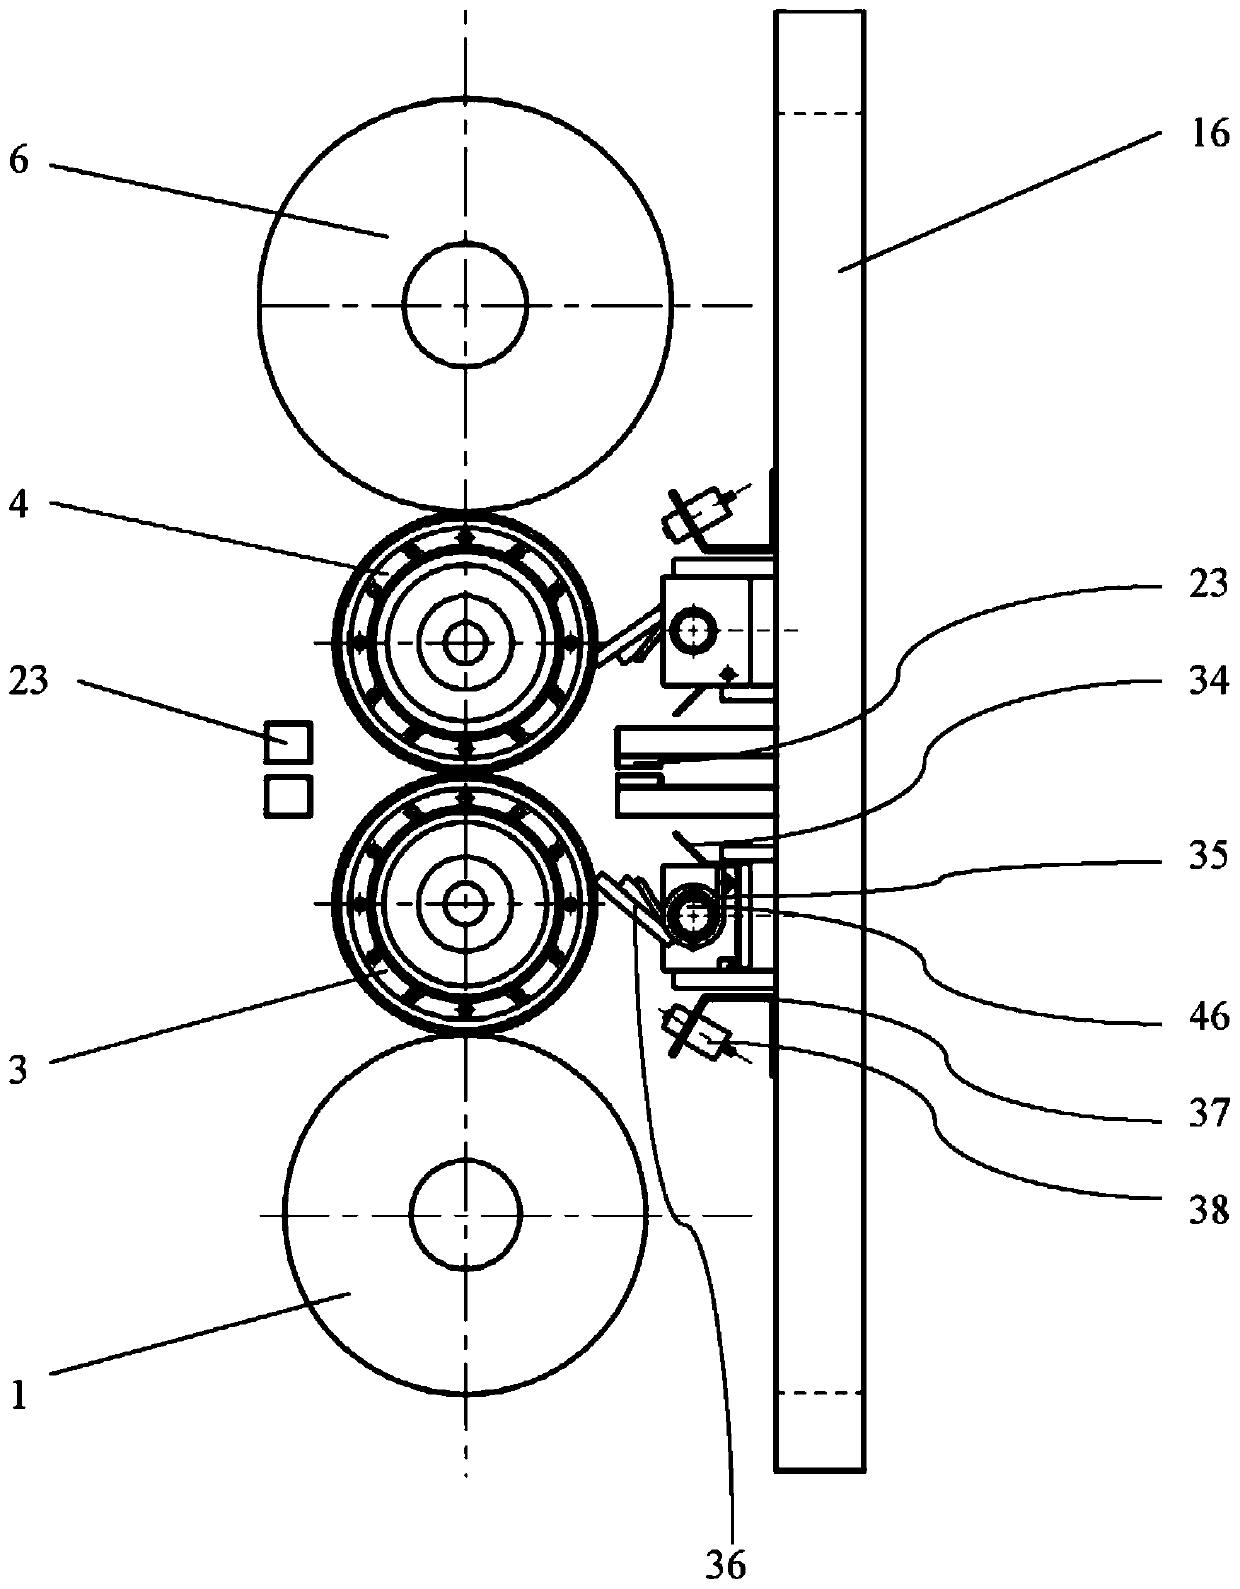 Four-roll lithium belt calendering mechanism